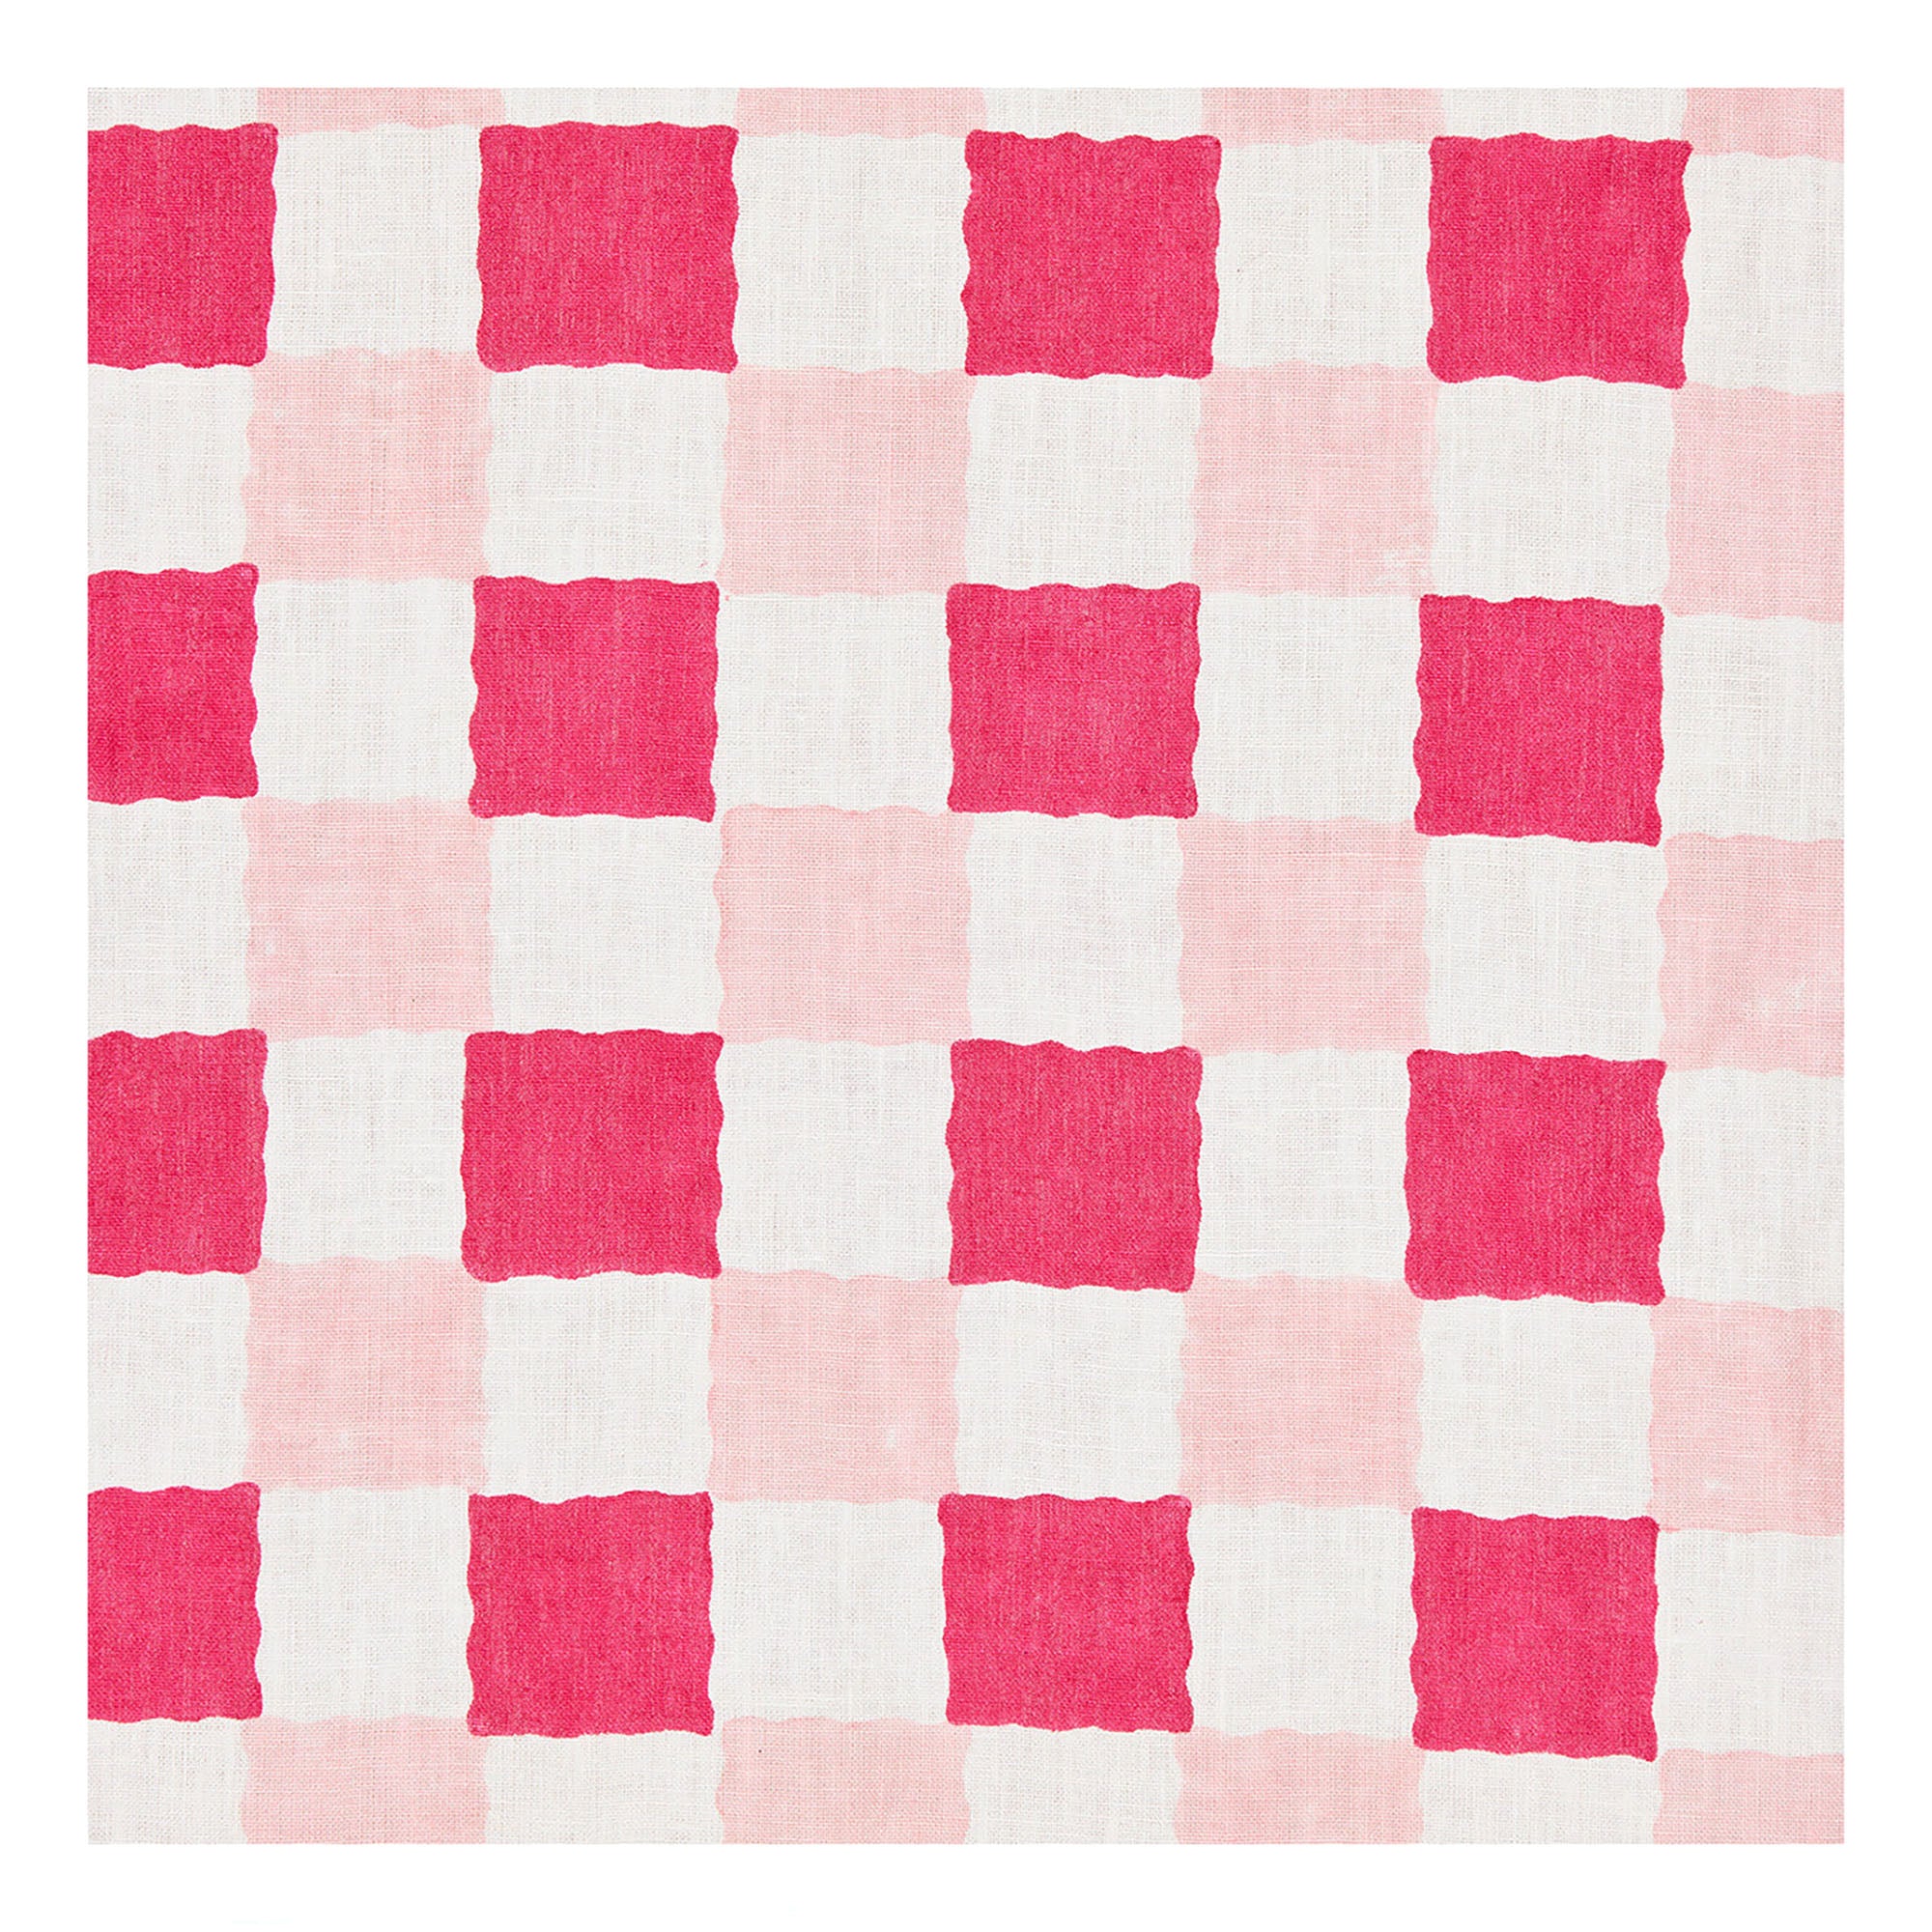 Chequer Block printed Fabric Linen Pinks